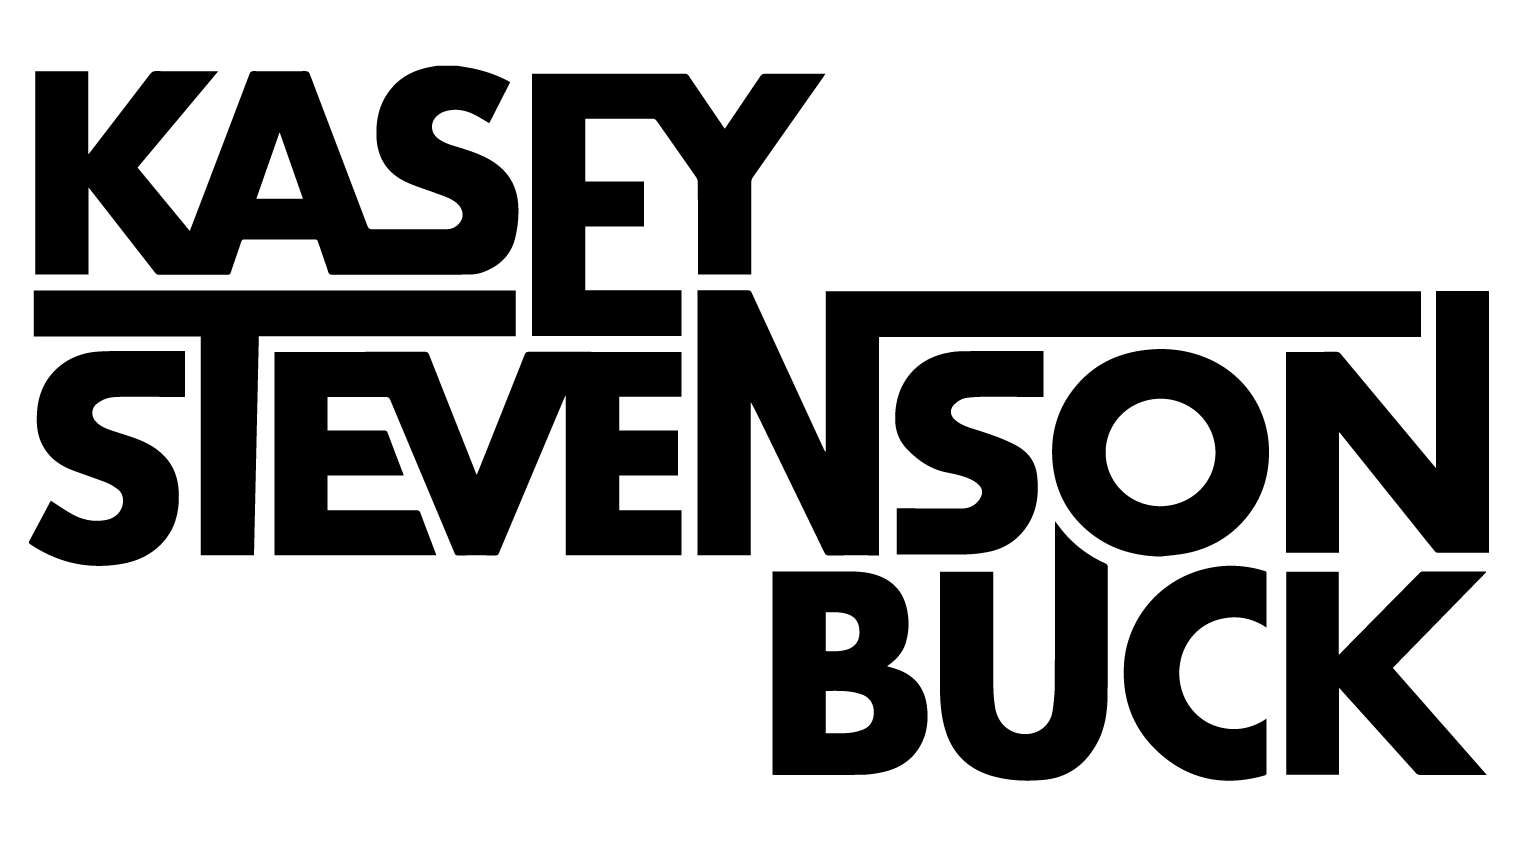 Kasey Stevenson Buck